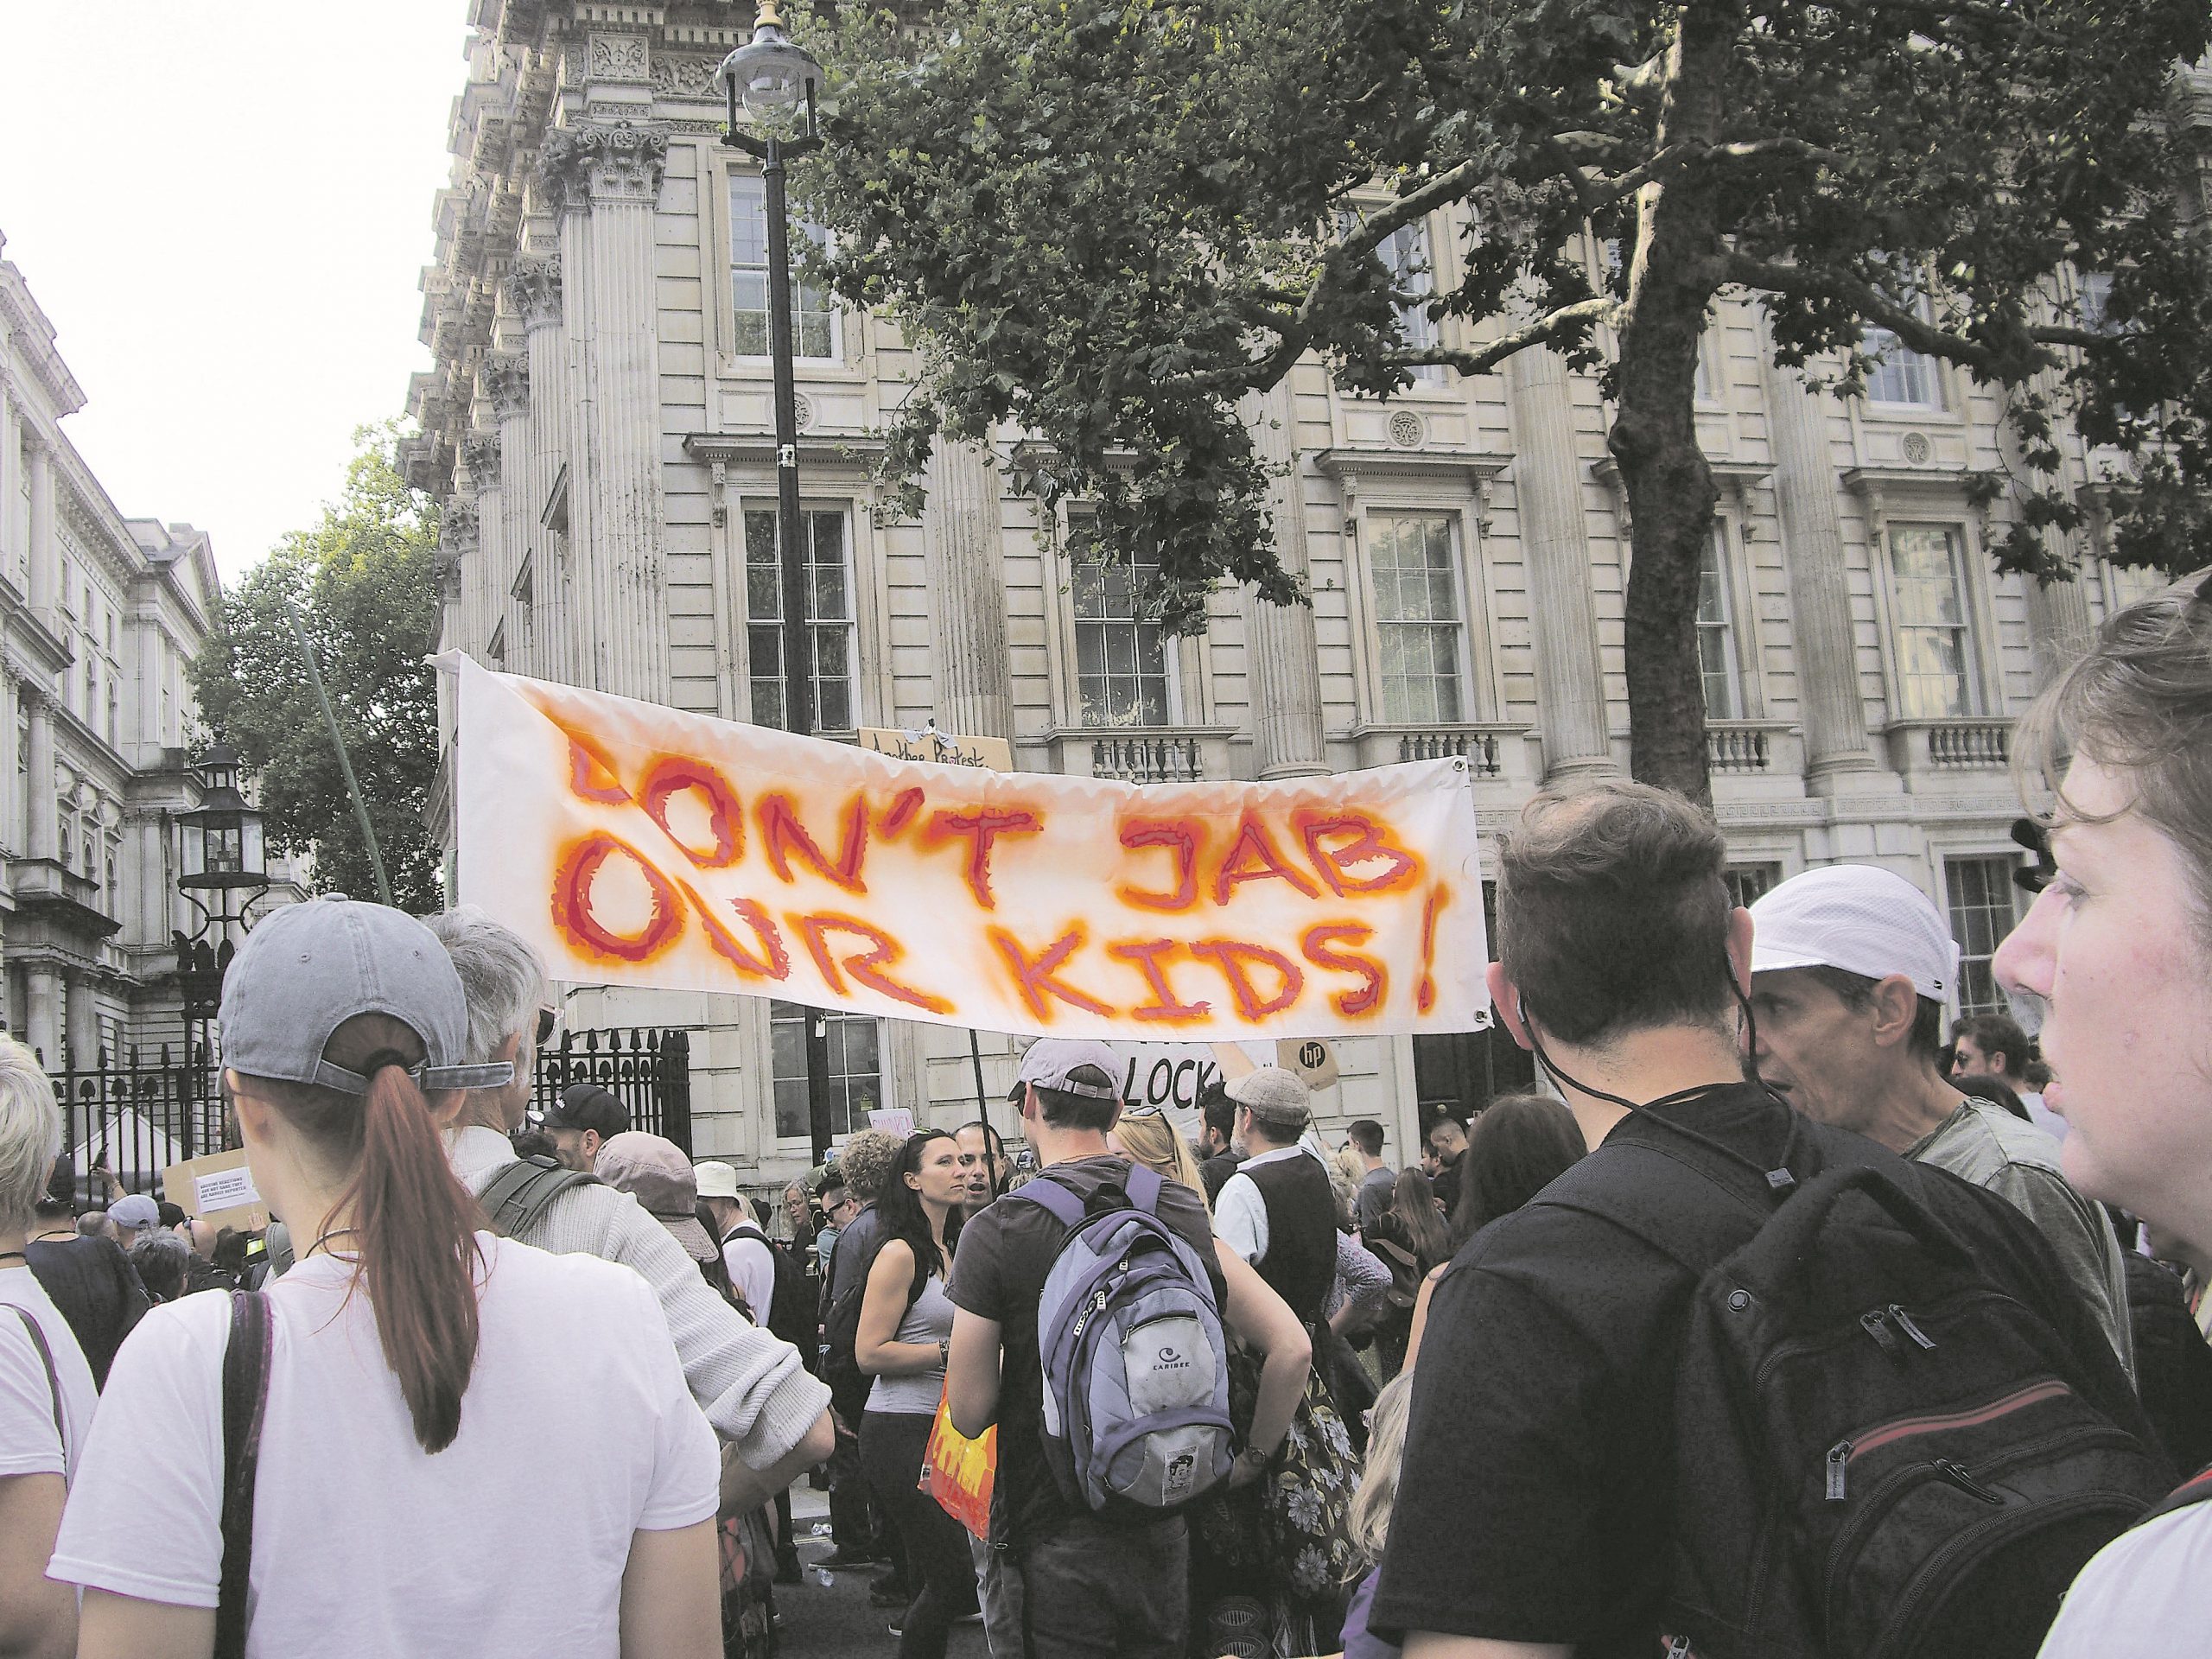 Concerned parents march through London